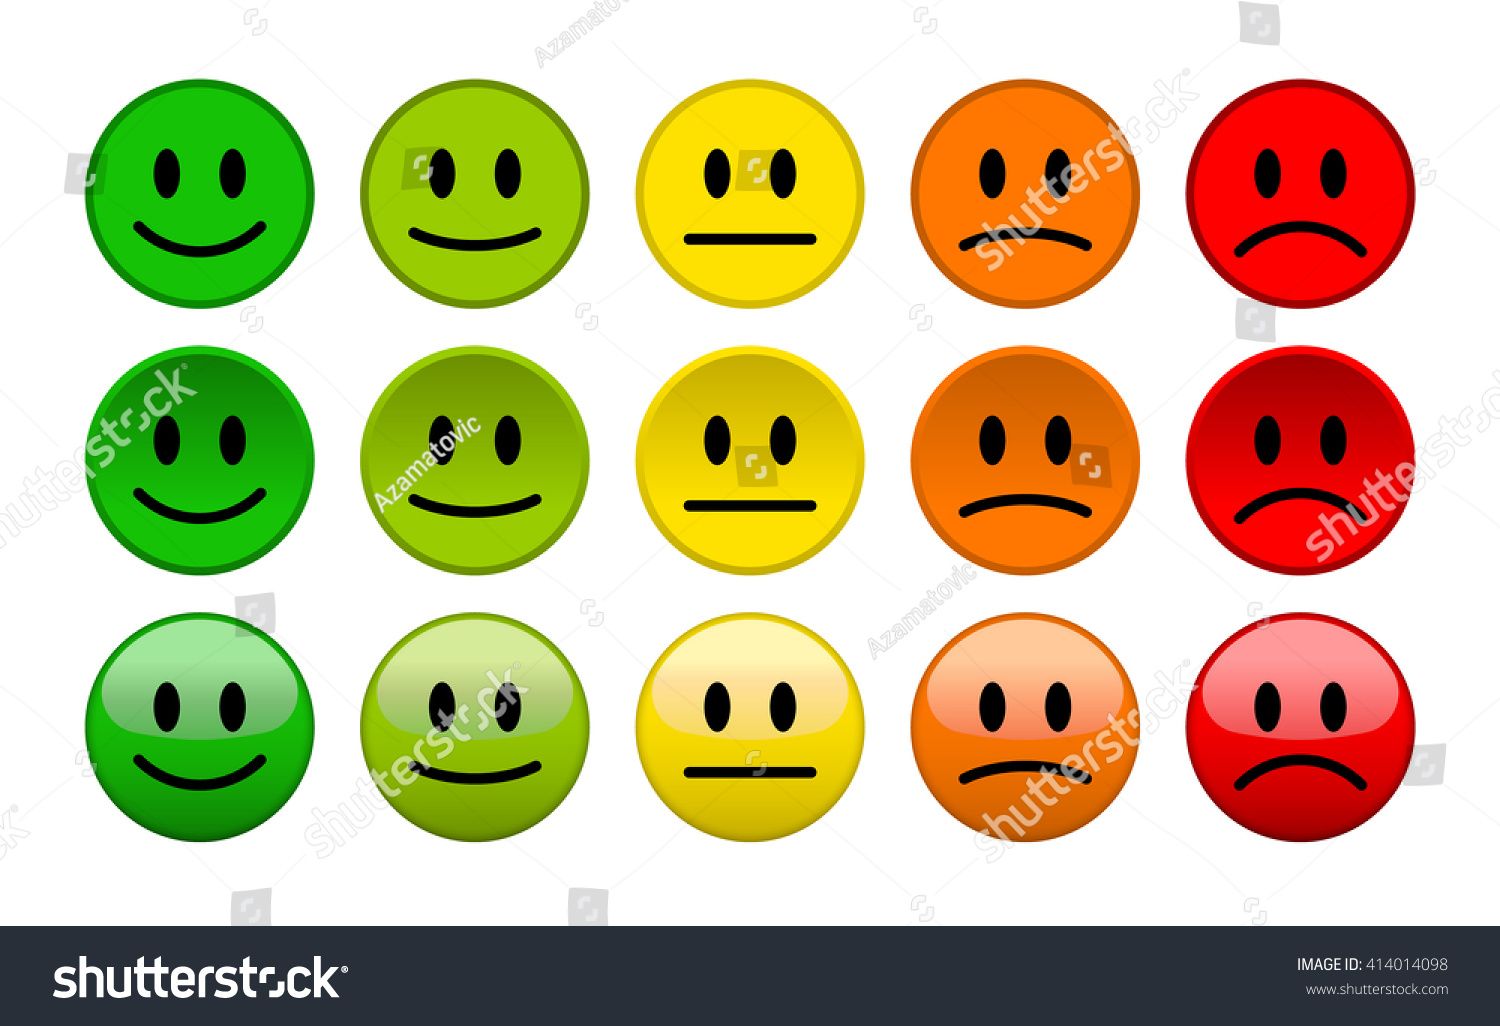 Emotion, face, feeling, good, mood, survey icon | Icon search engine